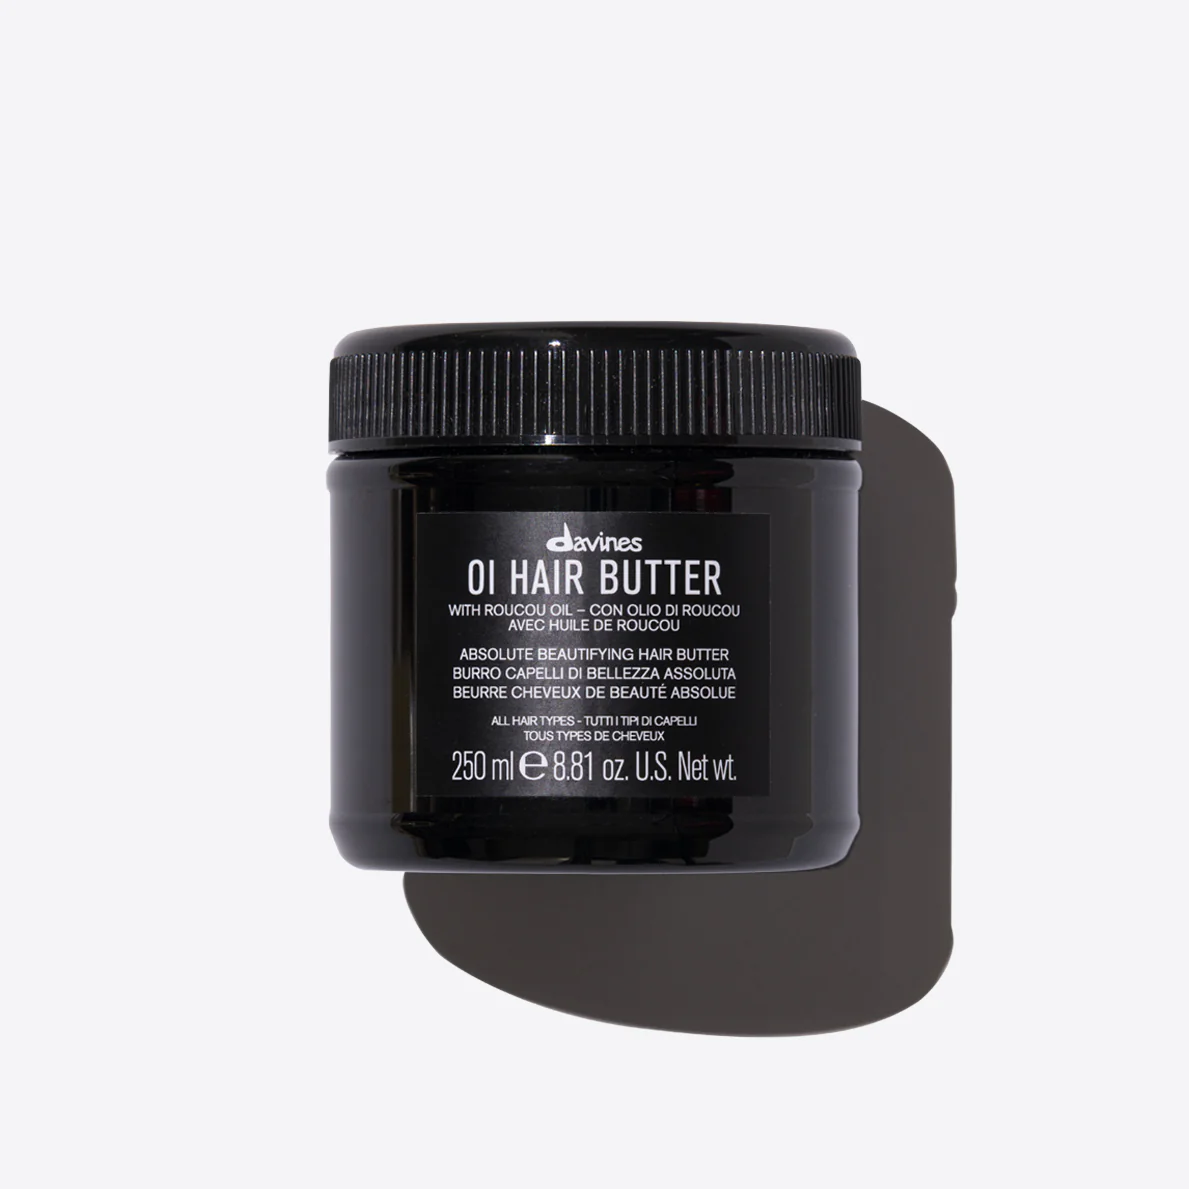 OI Hair Butter - Питательное масло для абсолютной красоты волос , объем 250 мл